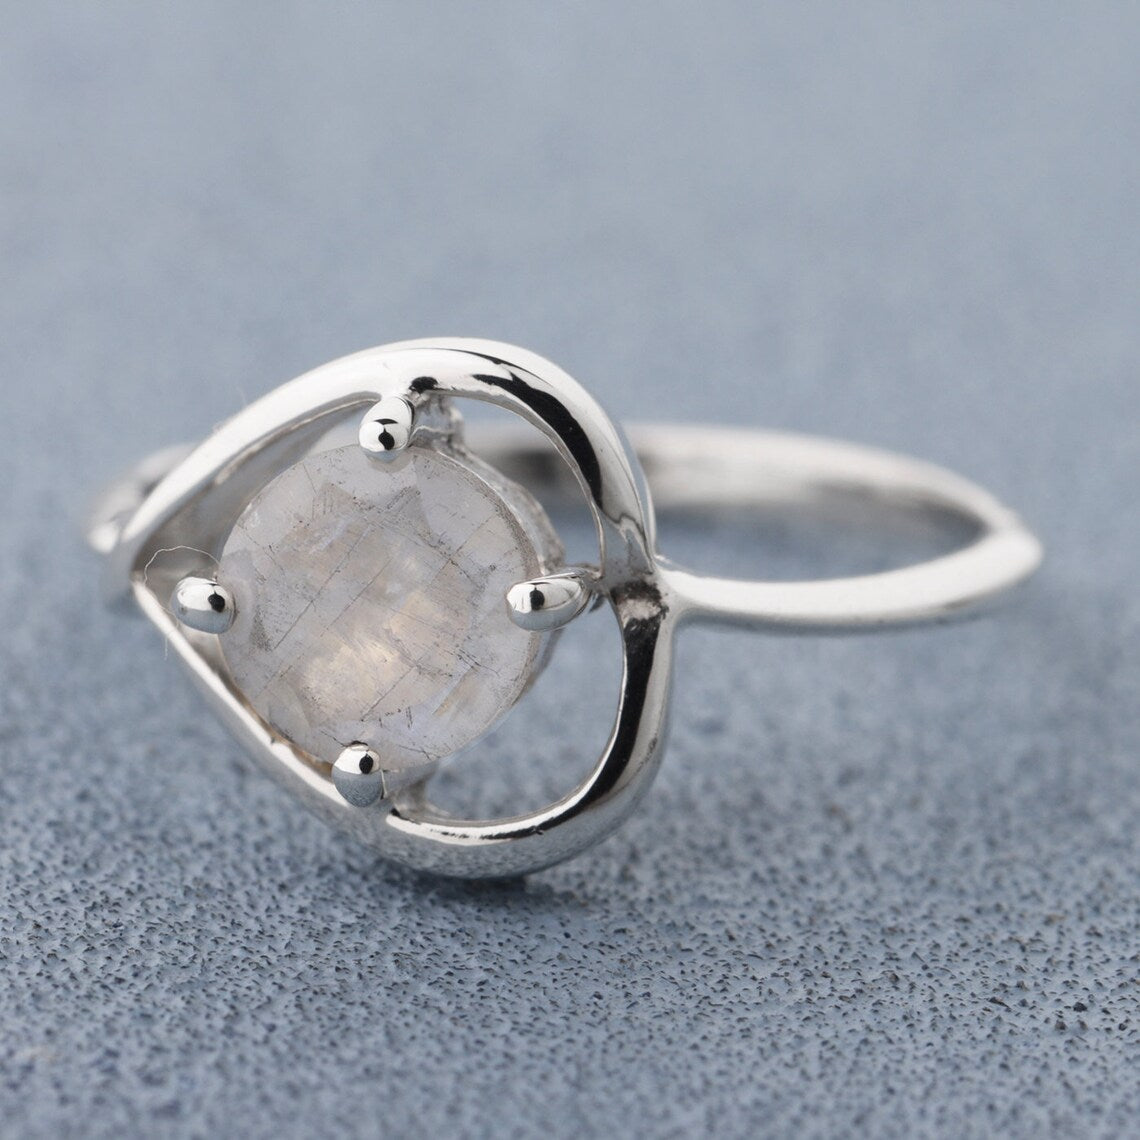 Garnet January Ring Birthstone Ring Natural Red Garnet Ring Garnet Prong Ring, Variation Ring Multi Stones Ring Color variations Ring